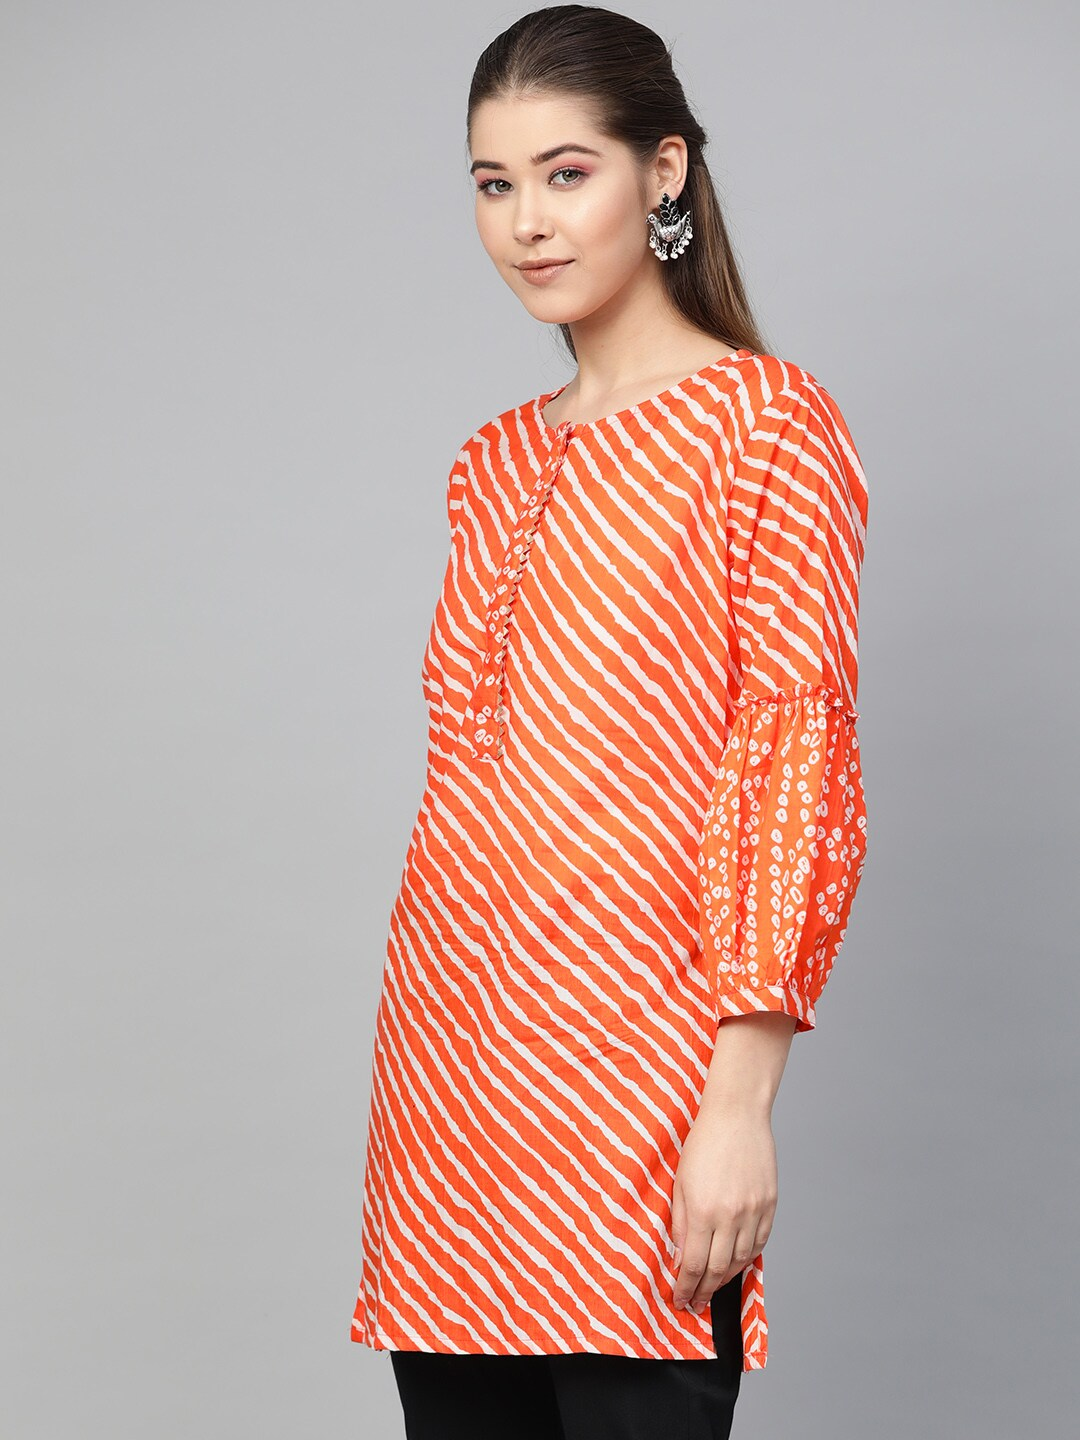 Women's  Orange & White Striped Tunic - Wahe-NOOR